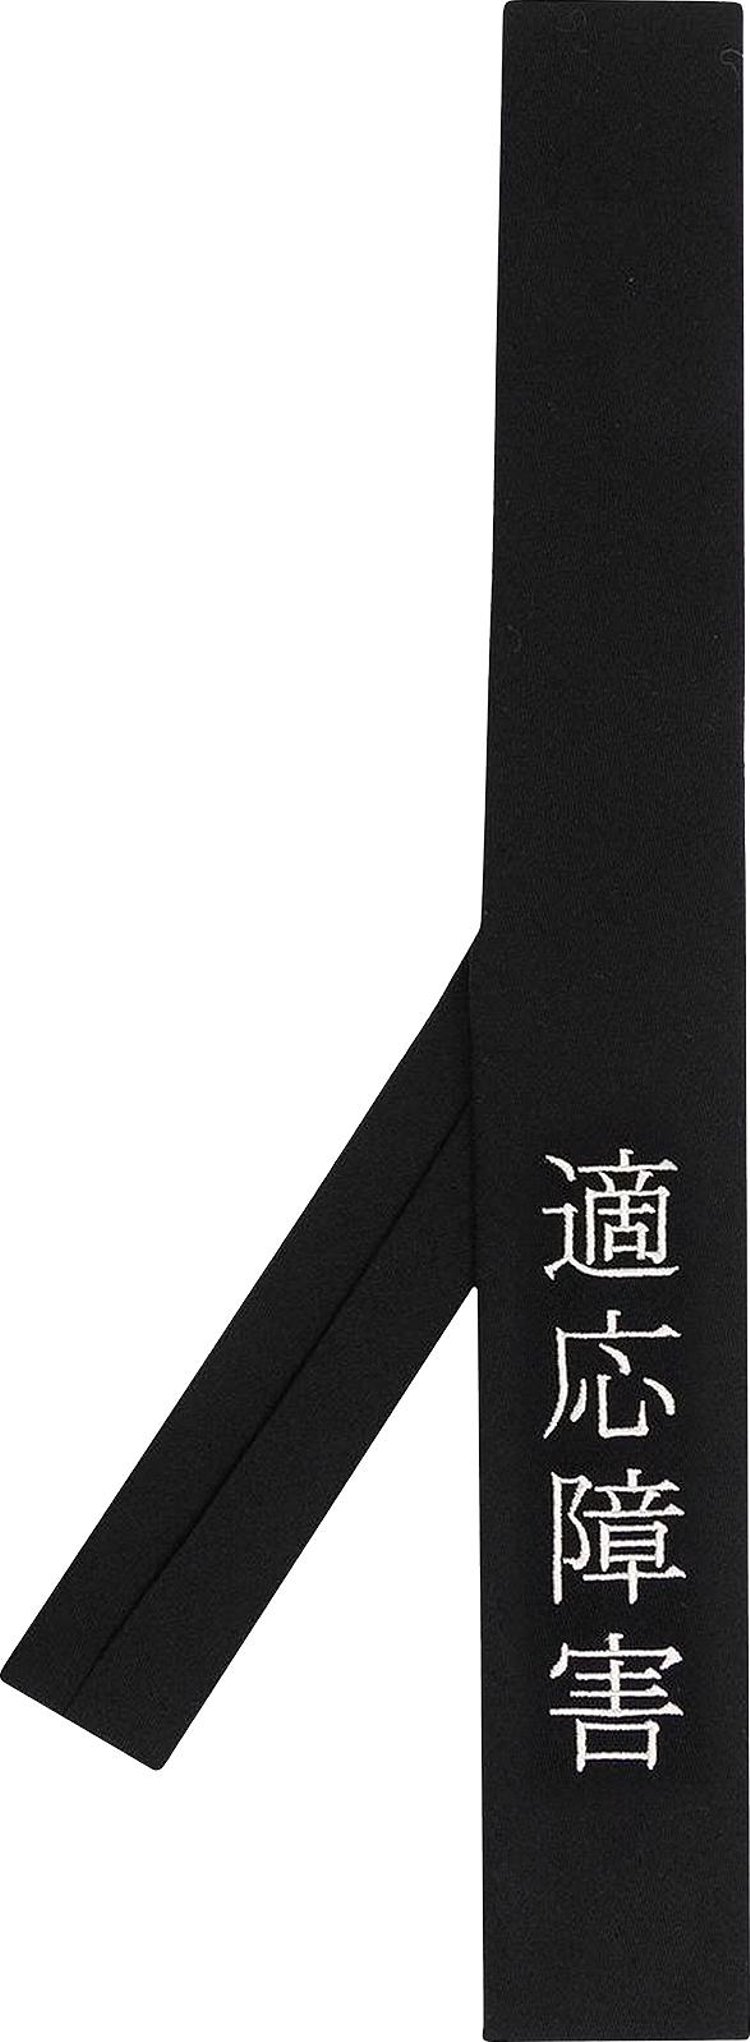 Yohji Yamamoto Pour Homme Message Tie Black 'Black'